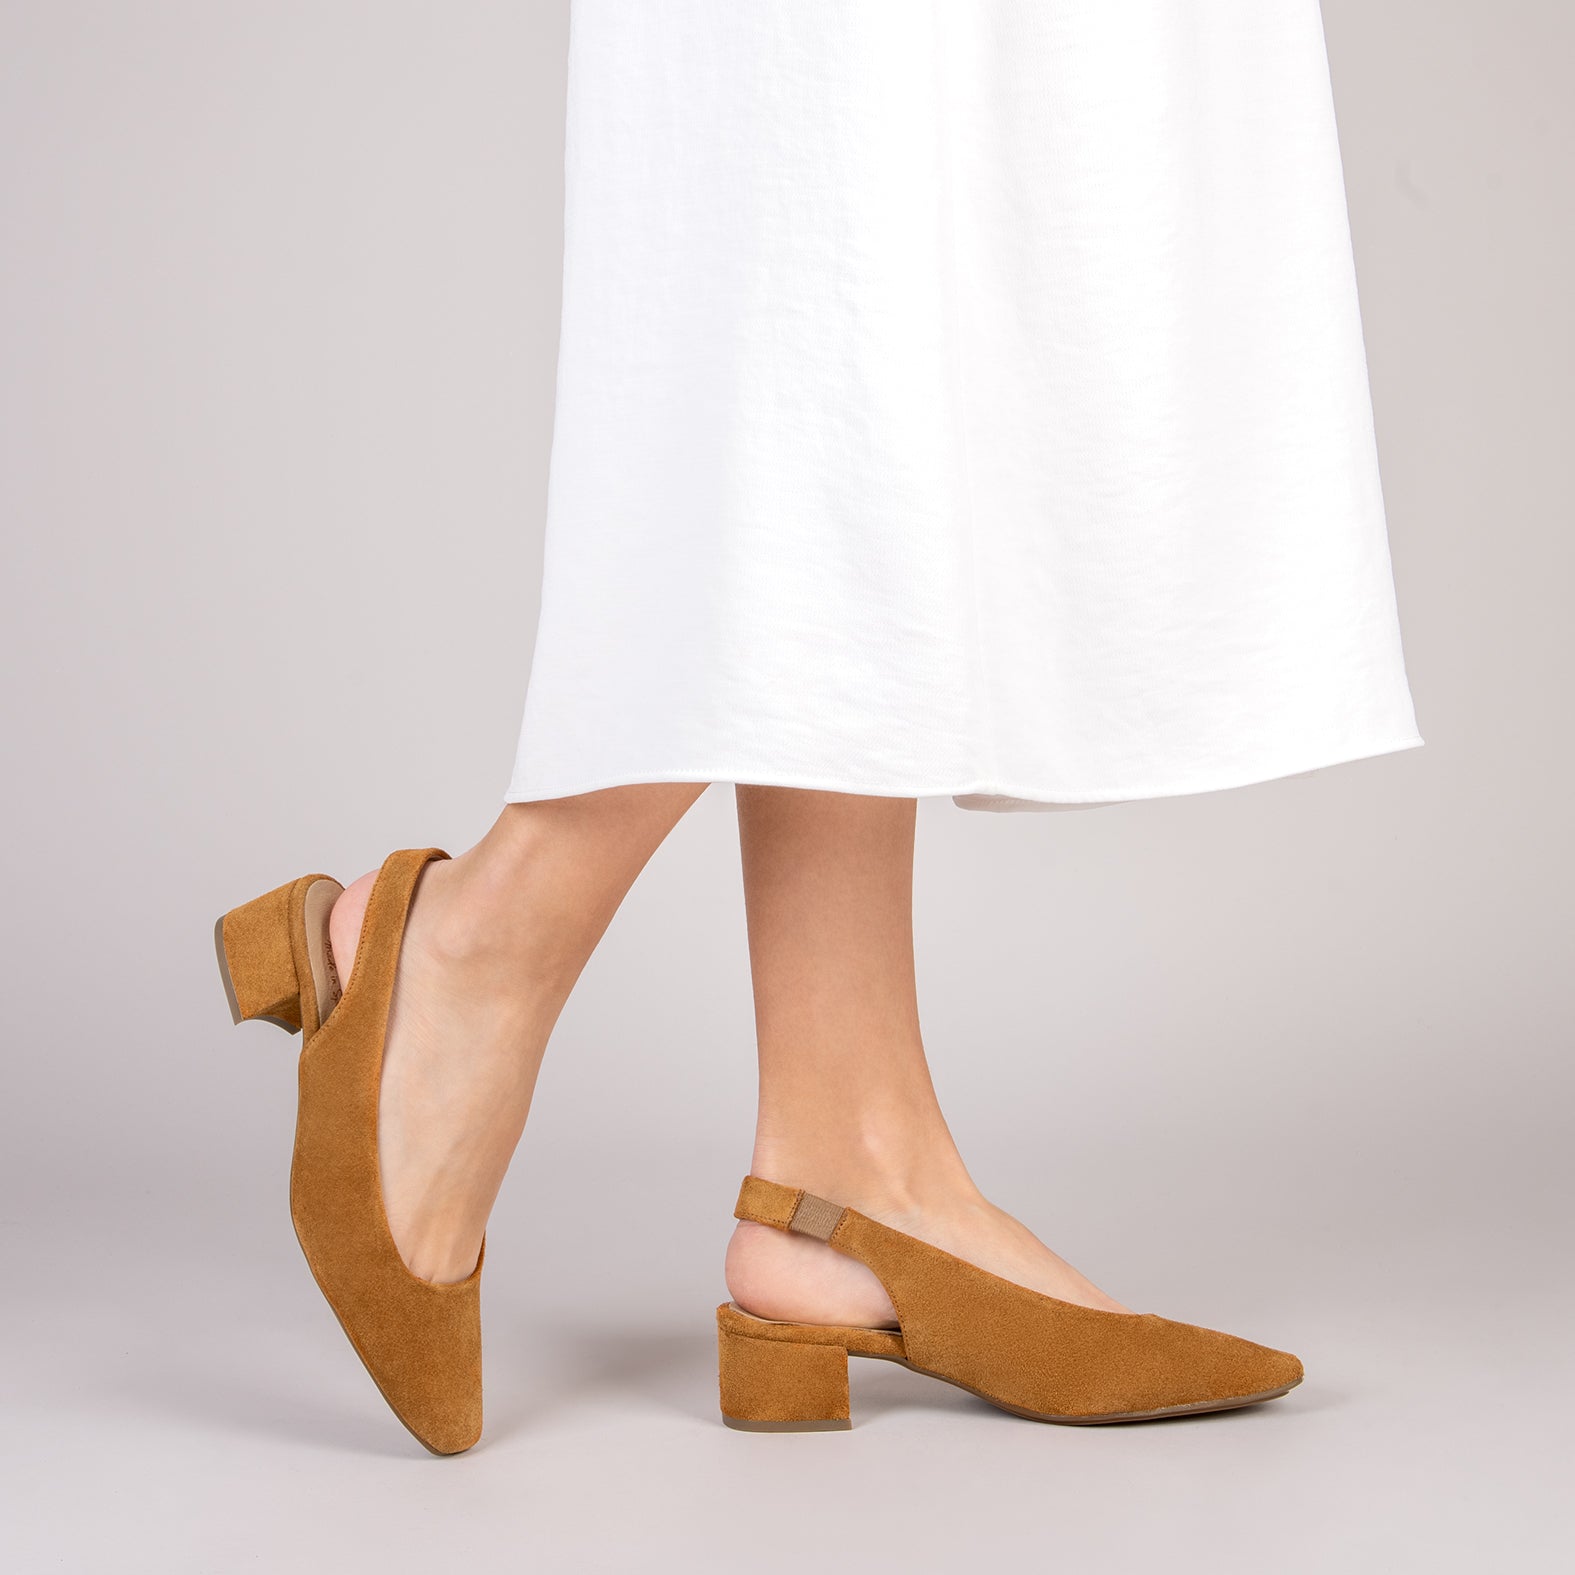 URBAN LADY – Zapatos de Tacón Destalonados CAMEL